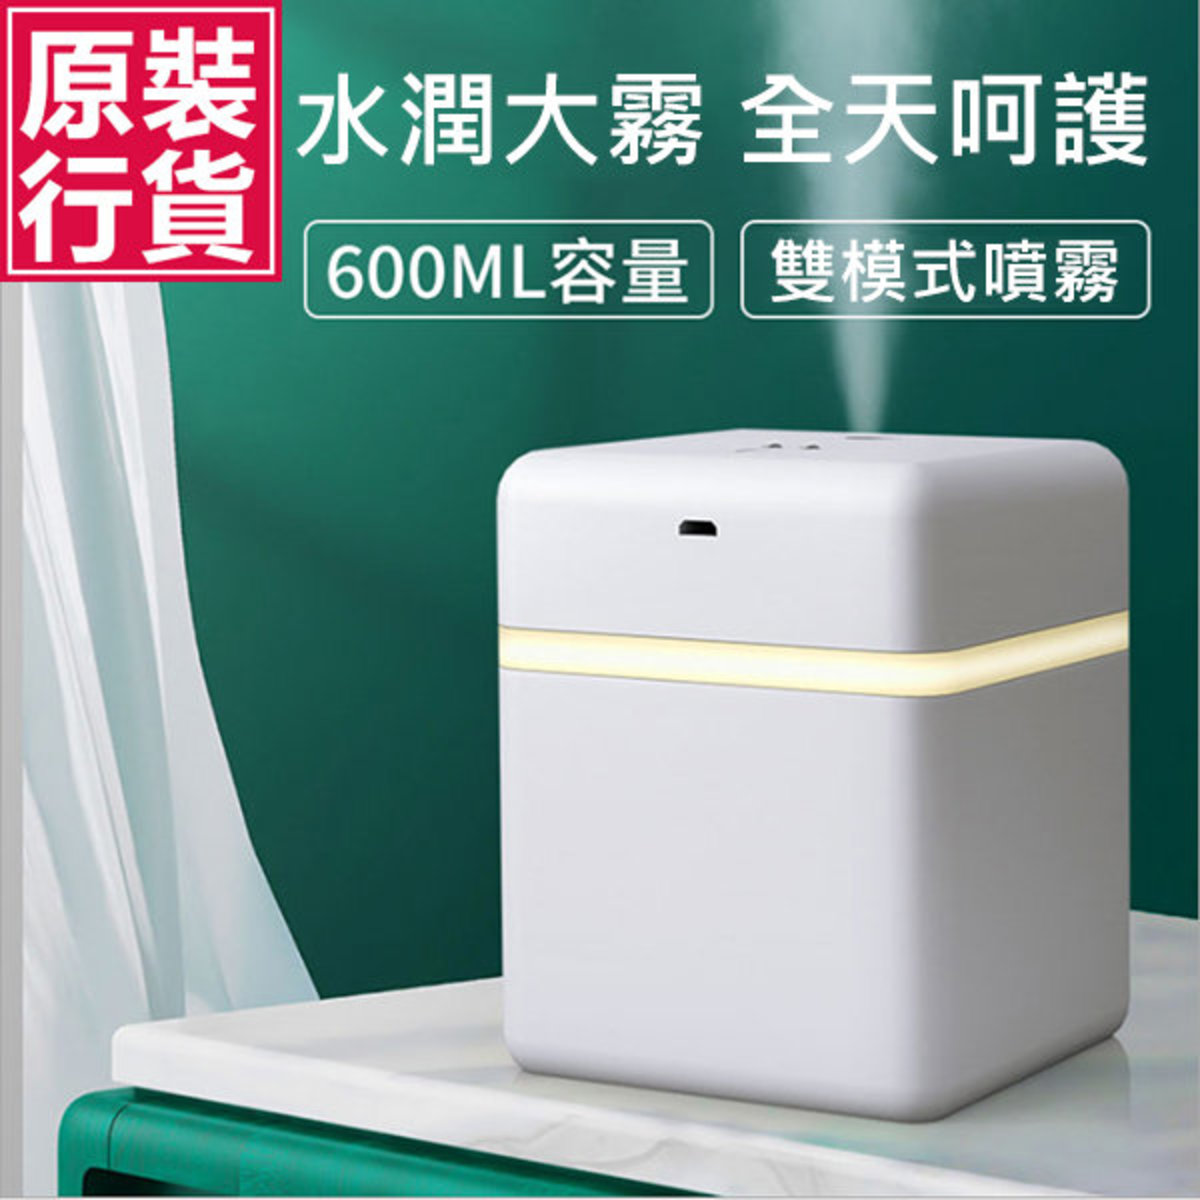 600mL Intelligent Induction Spray Humidifier J0420